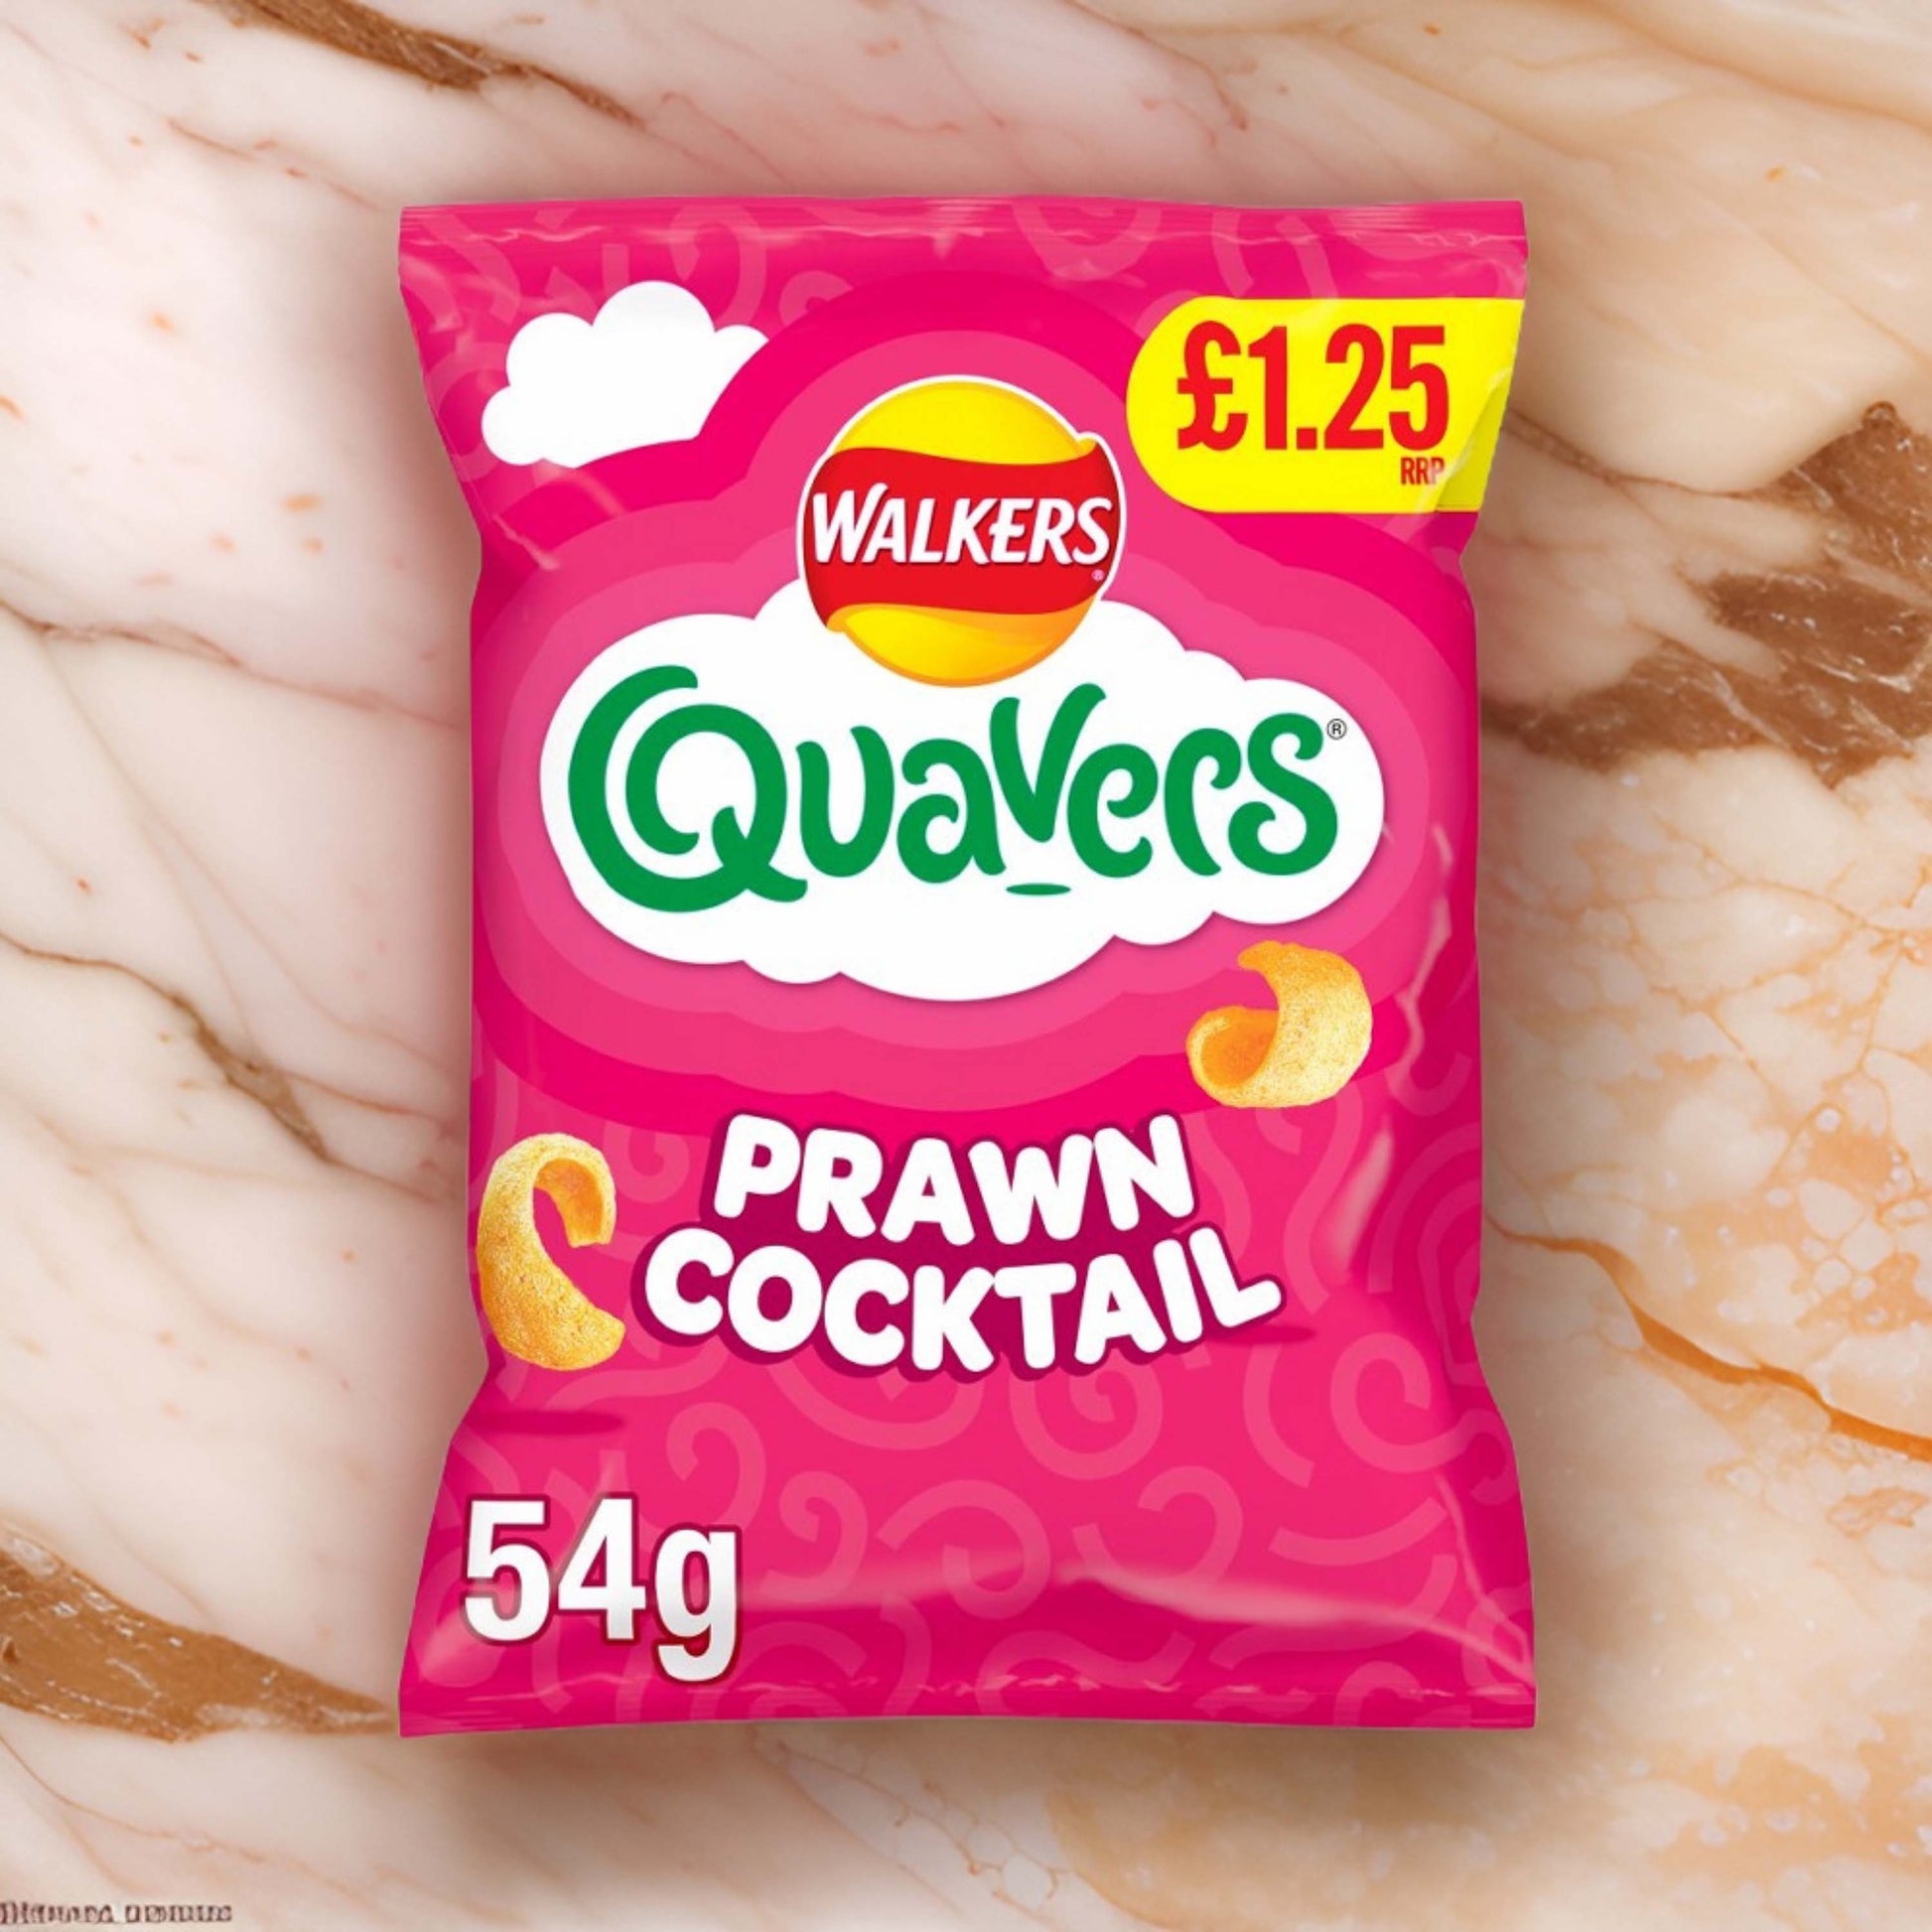 Walkers Quavers Prawn Cocktail 54g – (£1.25 Bag) - British Crisps